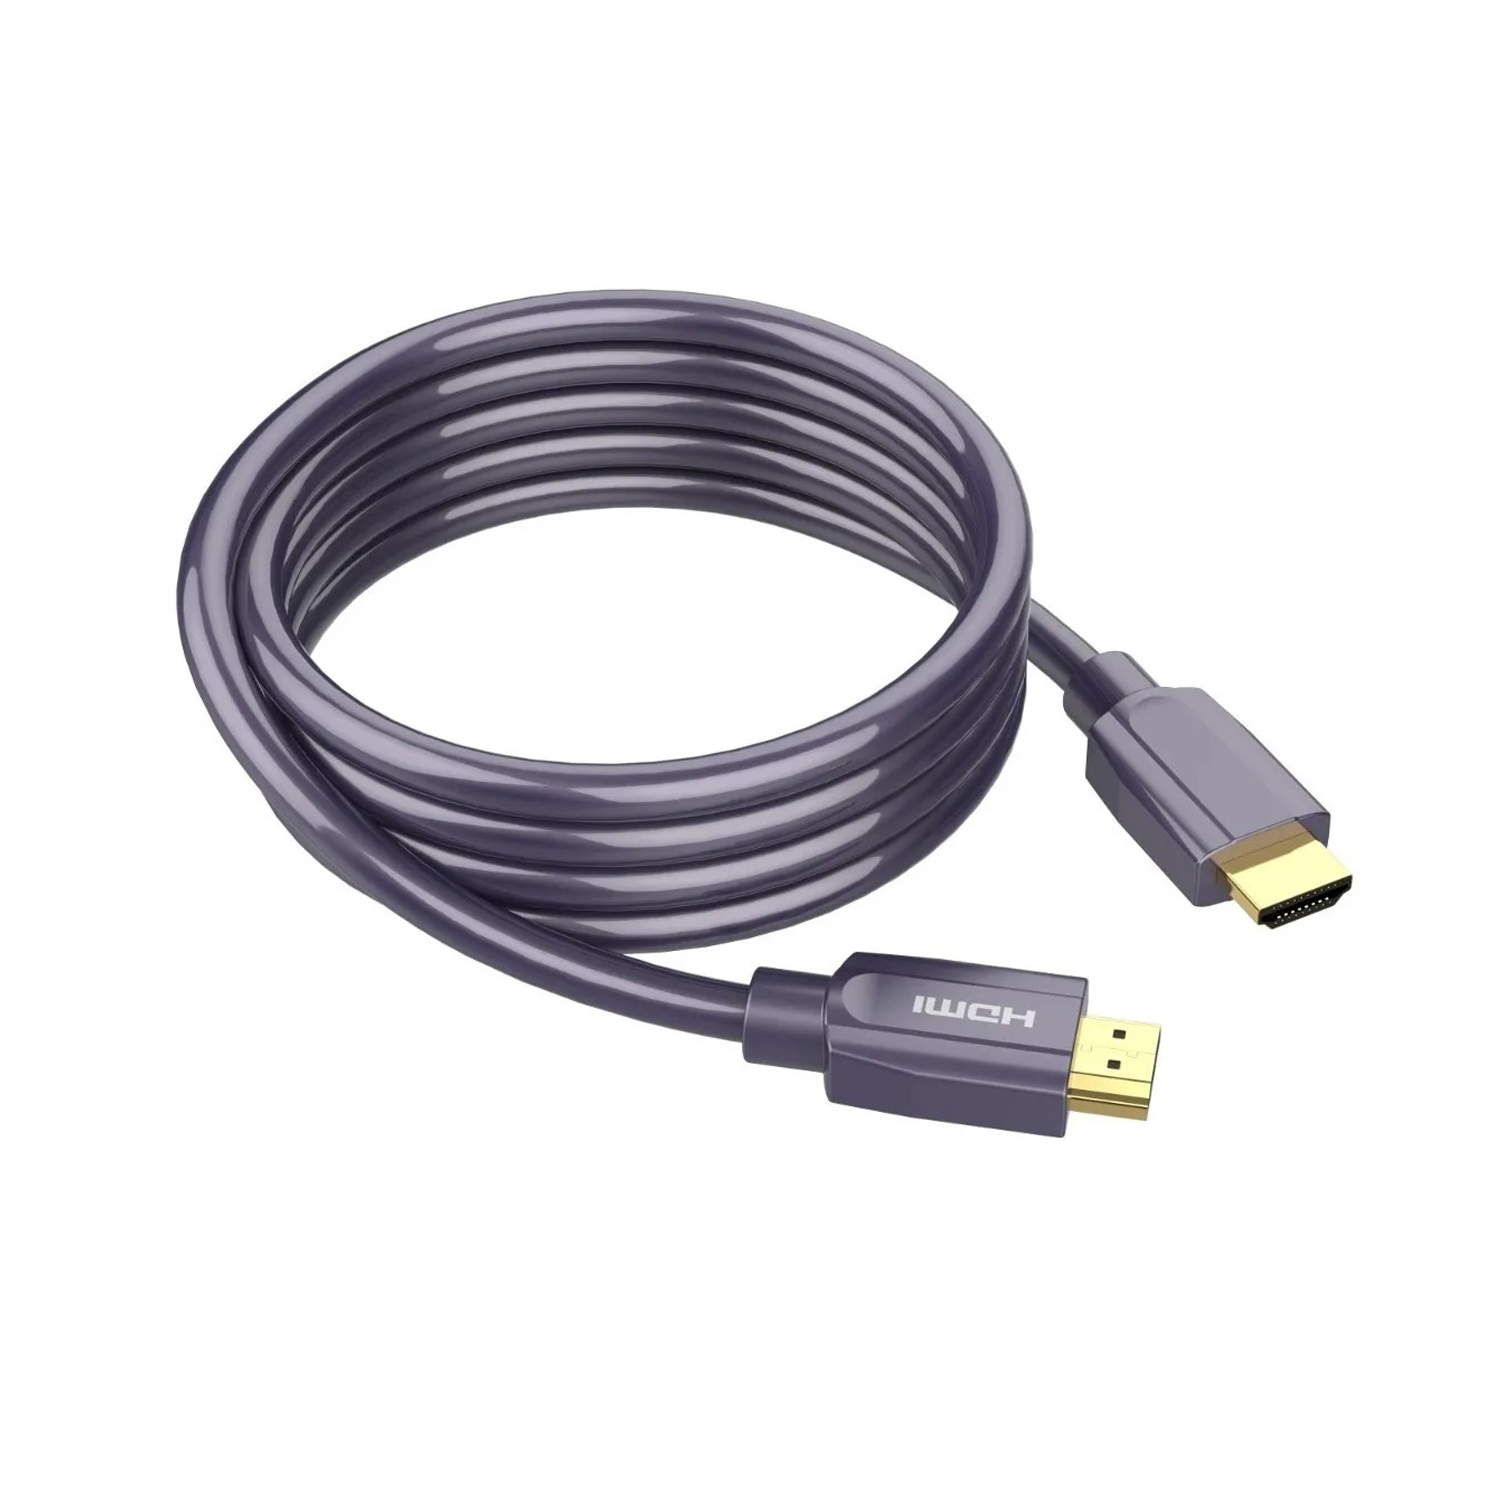 Cabos HDMI: verifique se os cabos HDMI estão devidamente conectados à TV e aos dispositivos externos.
Cabo de antena ou sinal a cabo: certifique-se de que o cabo de antena ou cabo de sinal esteja devidamente conectado à TV.